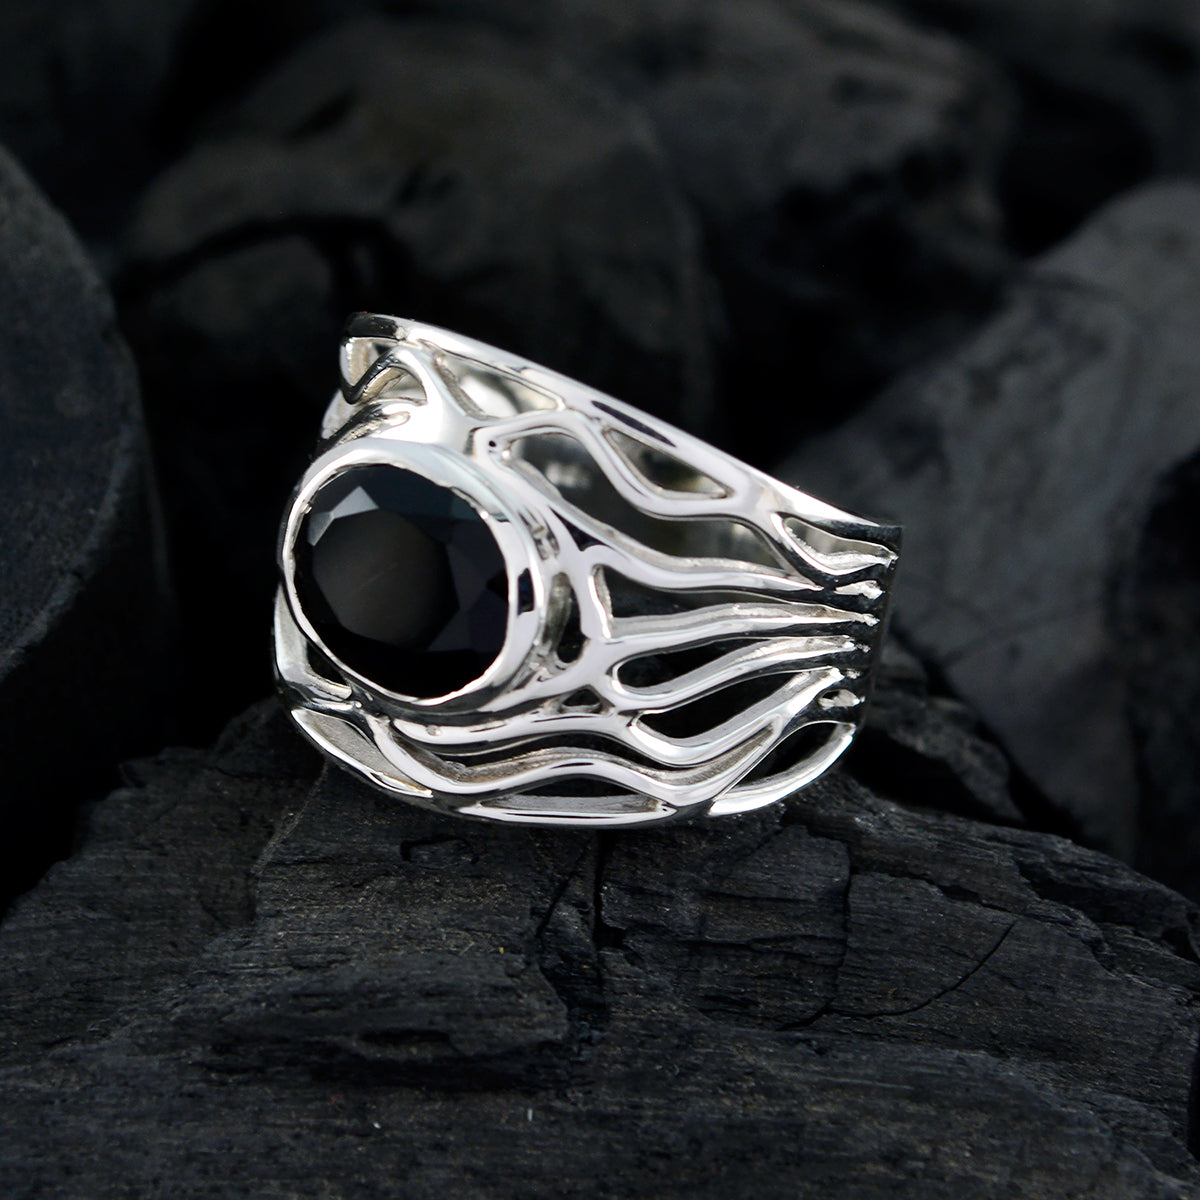 Riyo Nice Stone Black Onyx Sterling Silver Rings Hawaii Jewelry